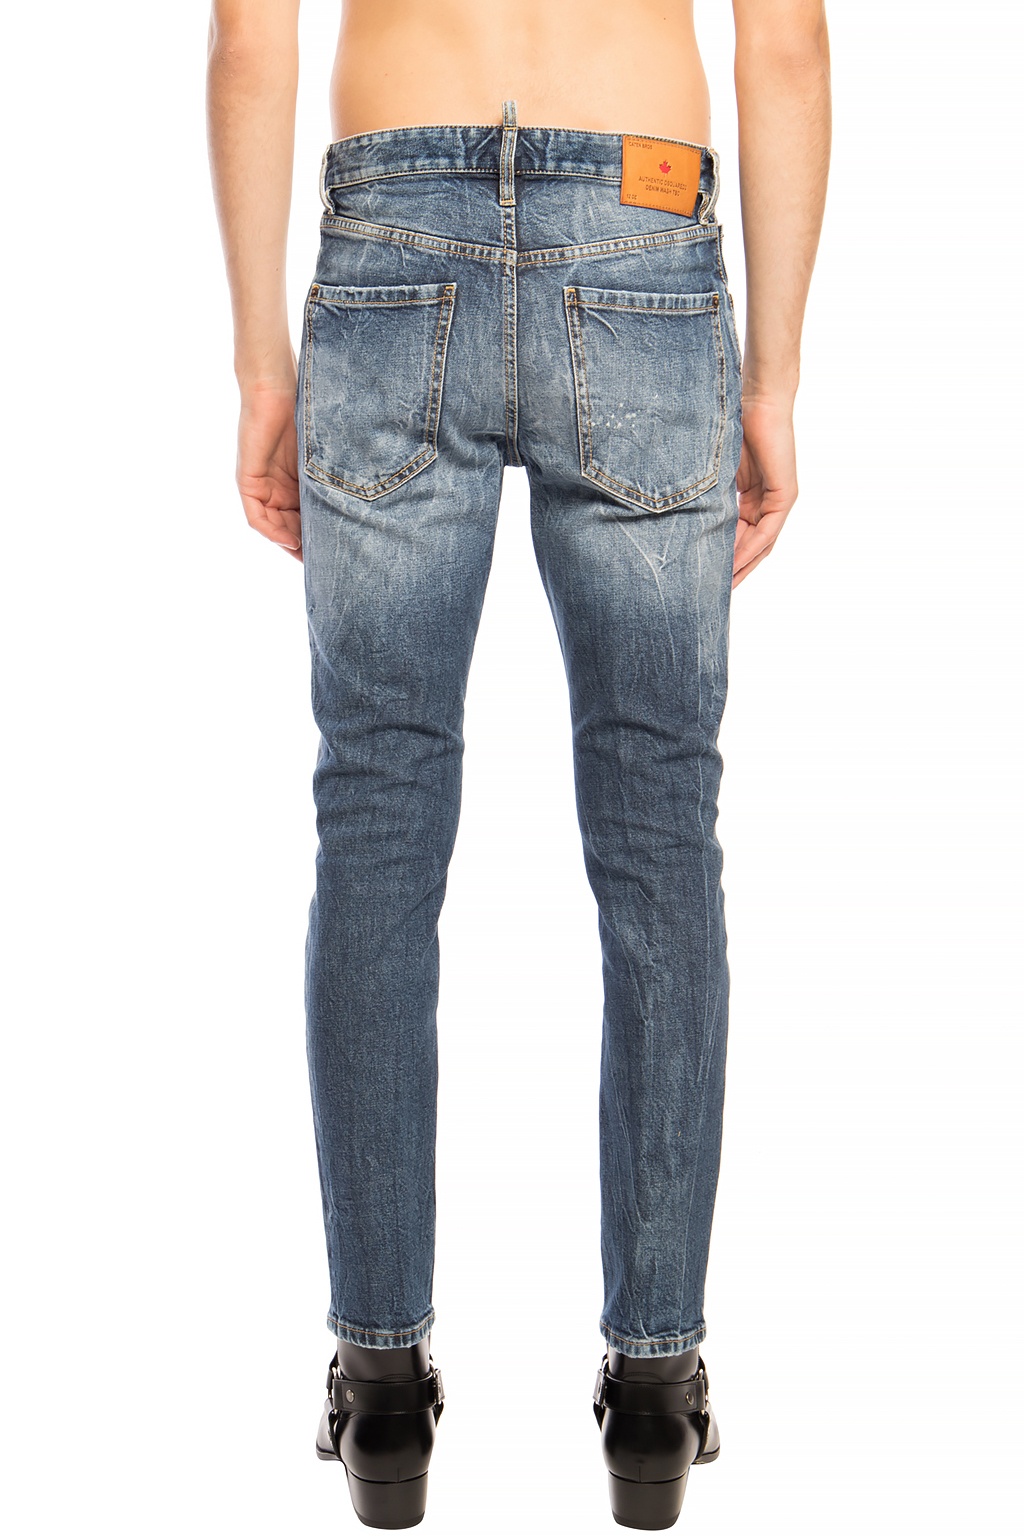 ‘Sexy Mercury Jean’ distressed jeans Dsquared2 - Vitkac Singapore